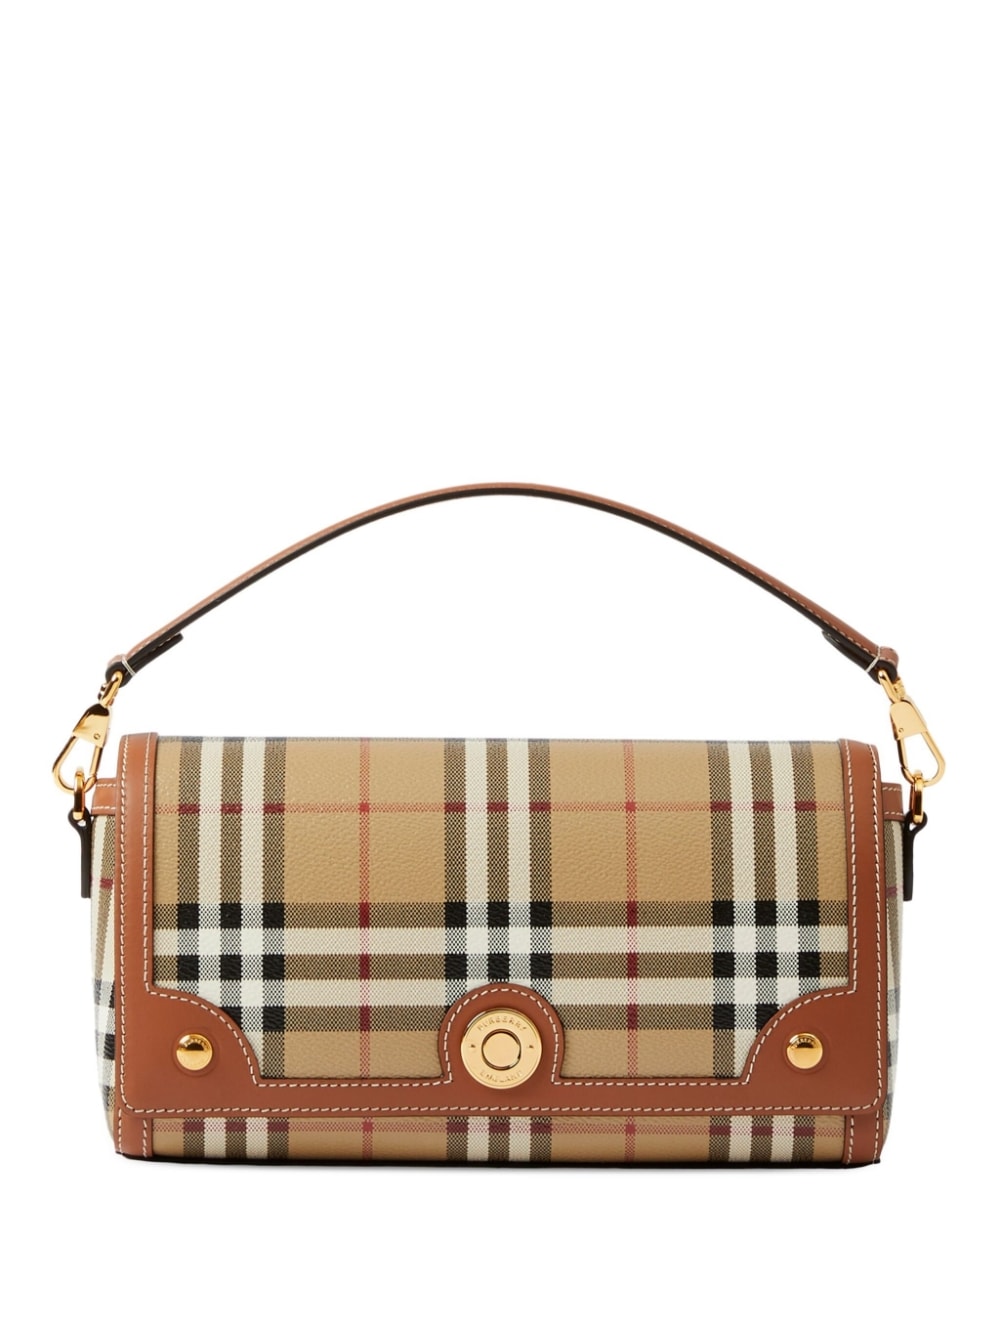 Shop Burberry Elegant Brown Leather And Check Handbag For Women